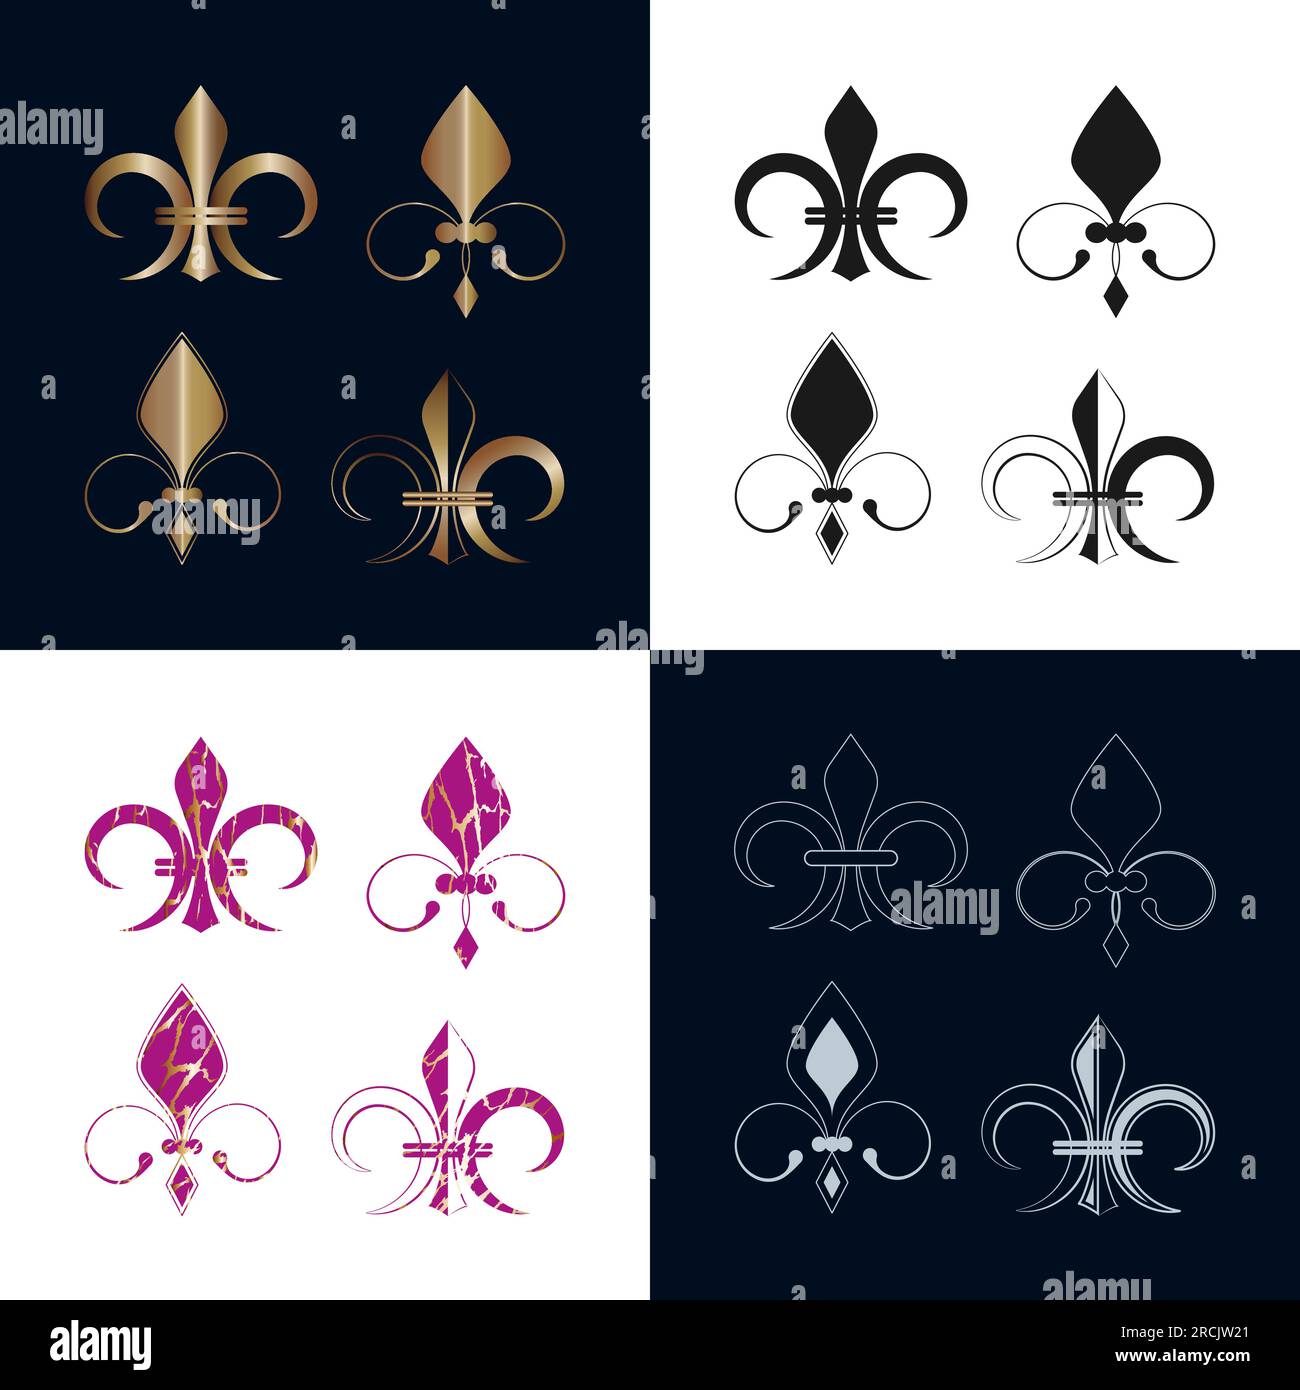 Fleur De Lis icons collection Royal French heraldic symbol Different types Gold, black, light blue, grunge textured, metallic, outline decorative desi Stock Vector